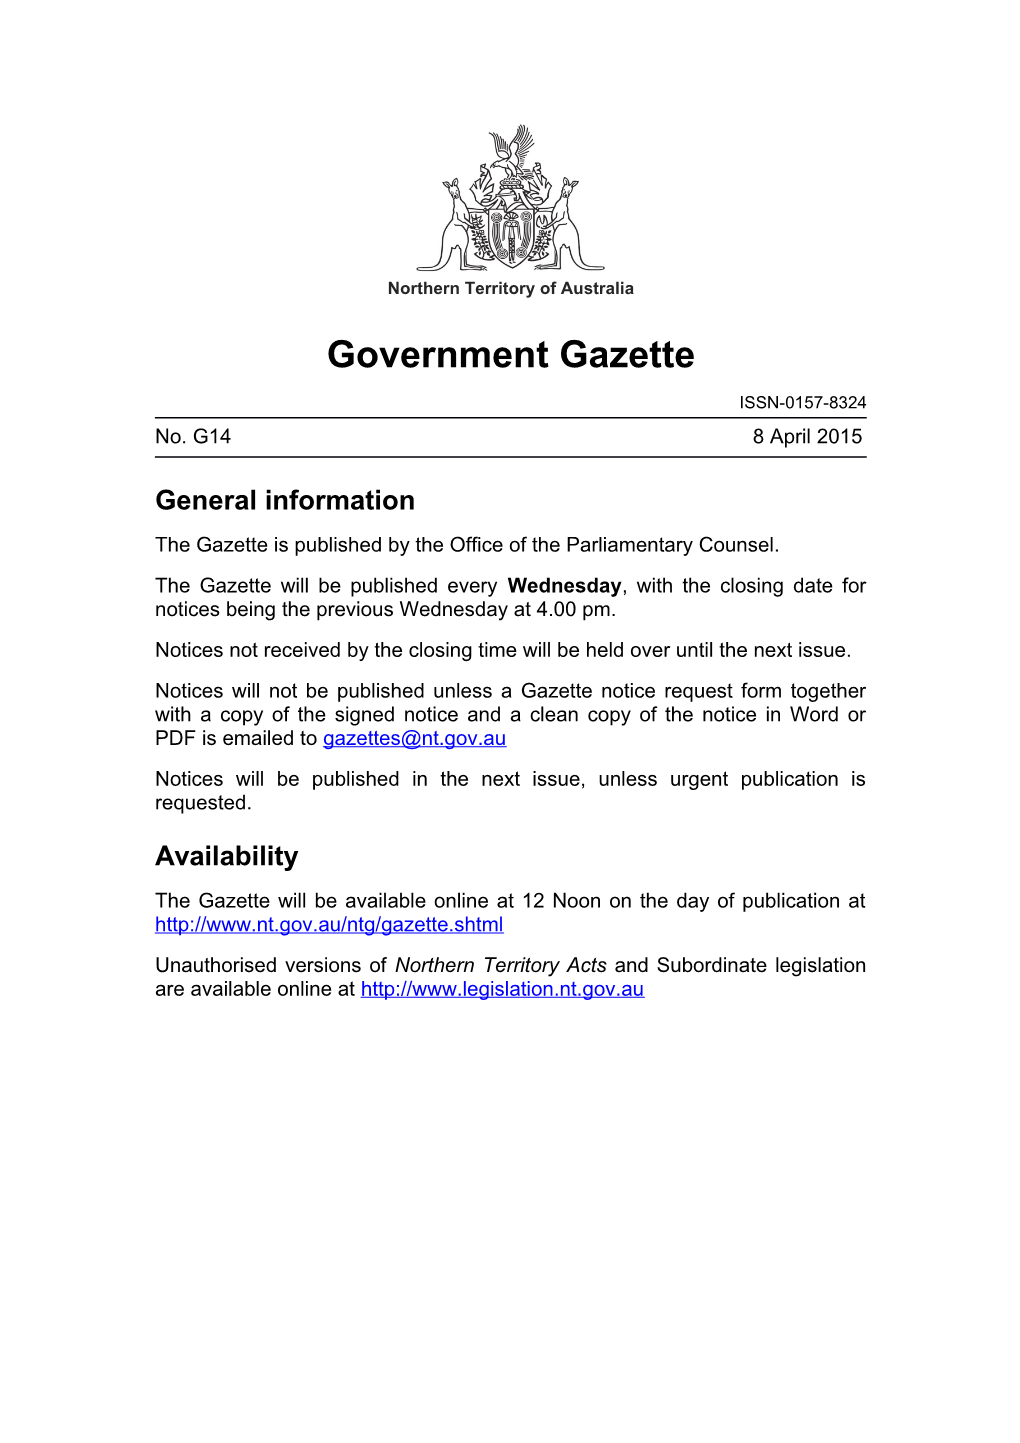 Northern Territory Government Gazette G14 2015